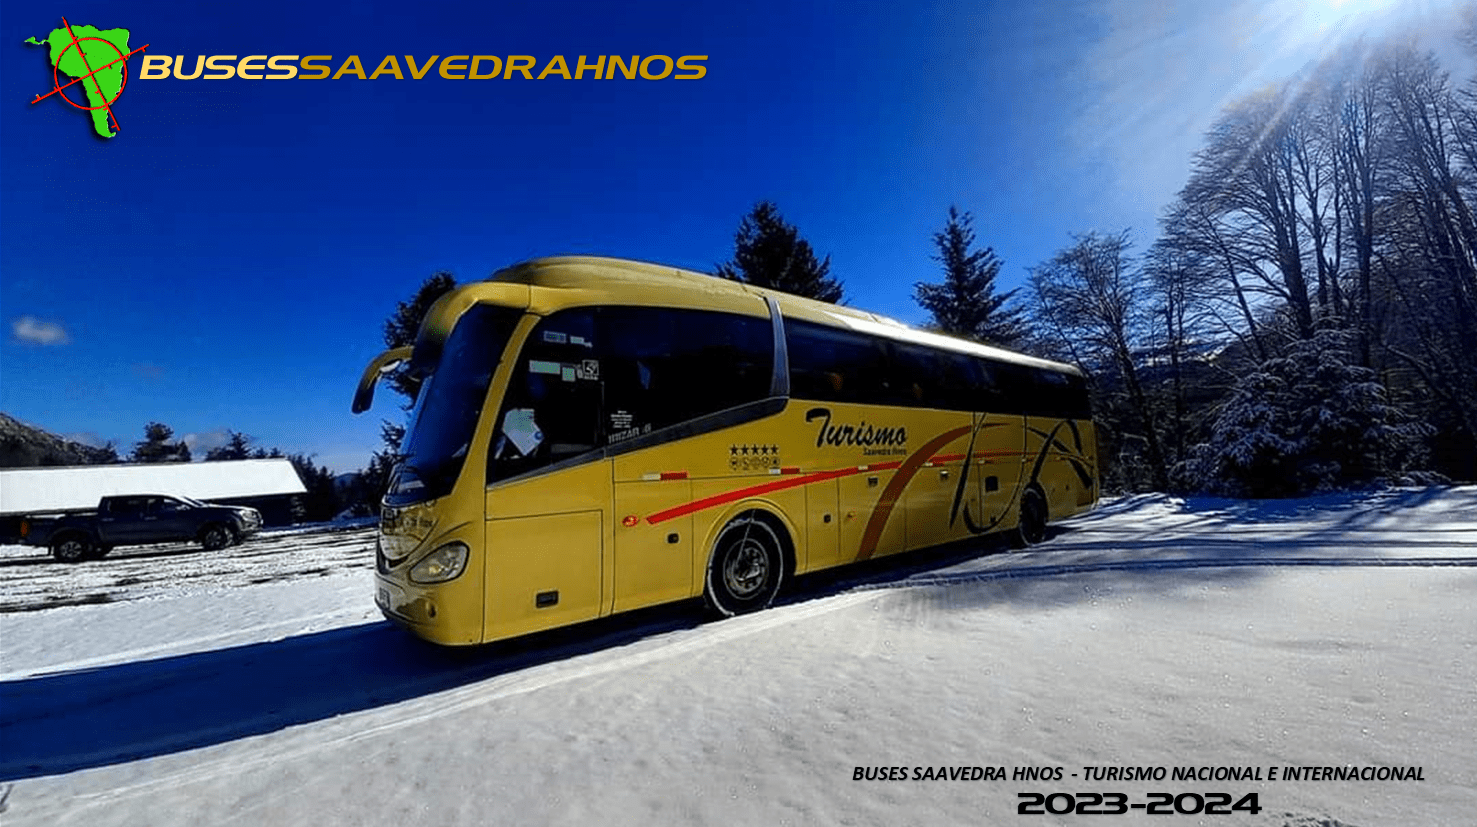 Buses Saavedra Hnos - Turismo - 06-min